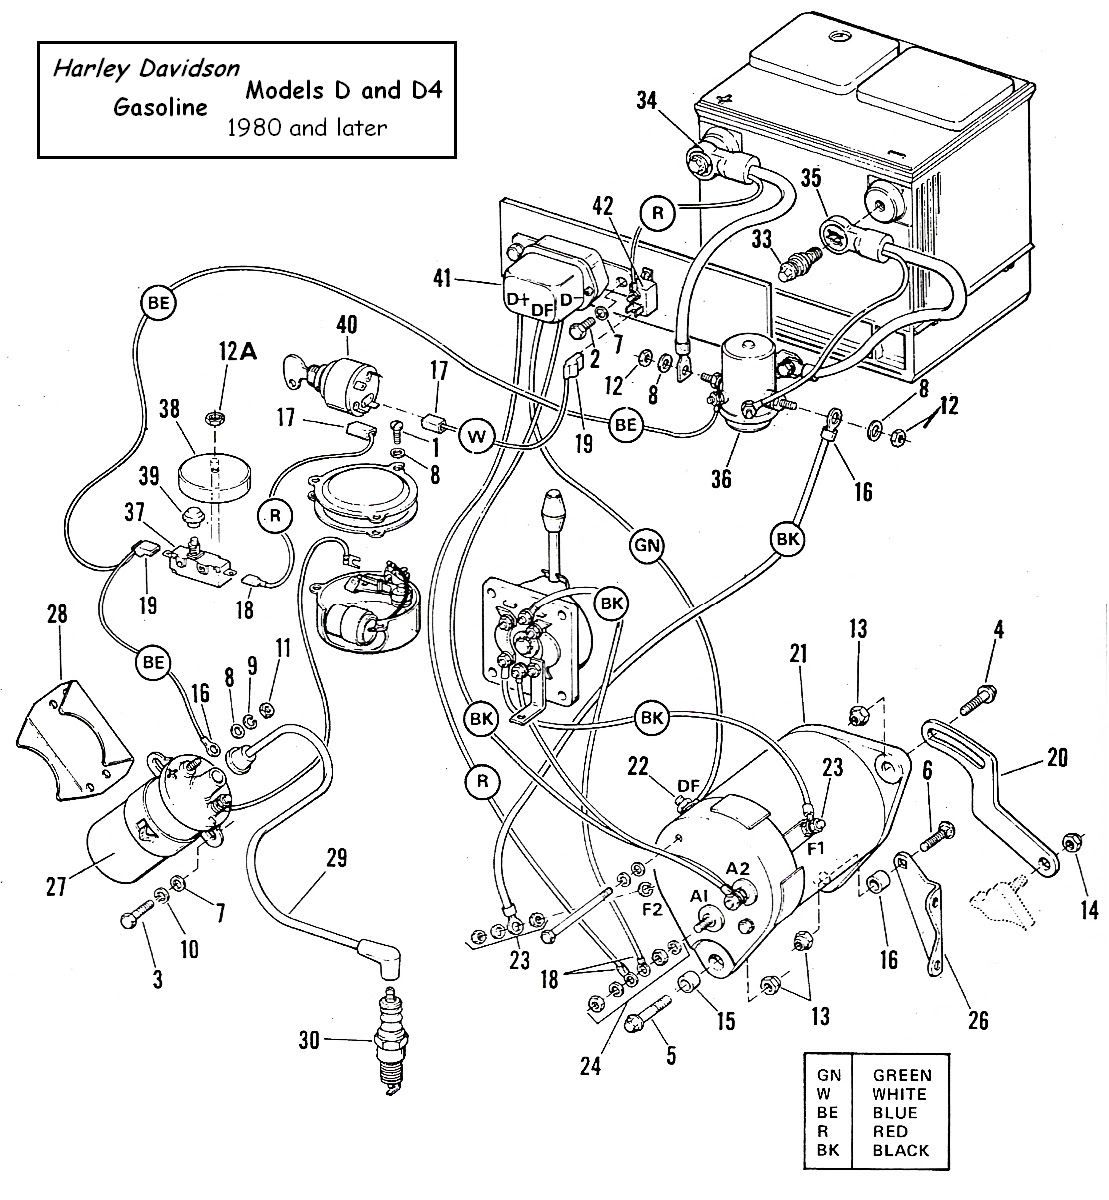 Columbia Par Car 48v Wiring Diagram - Wiring Diagram